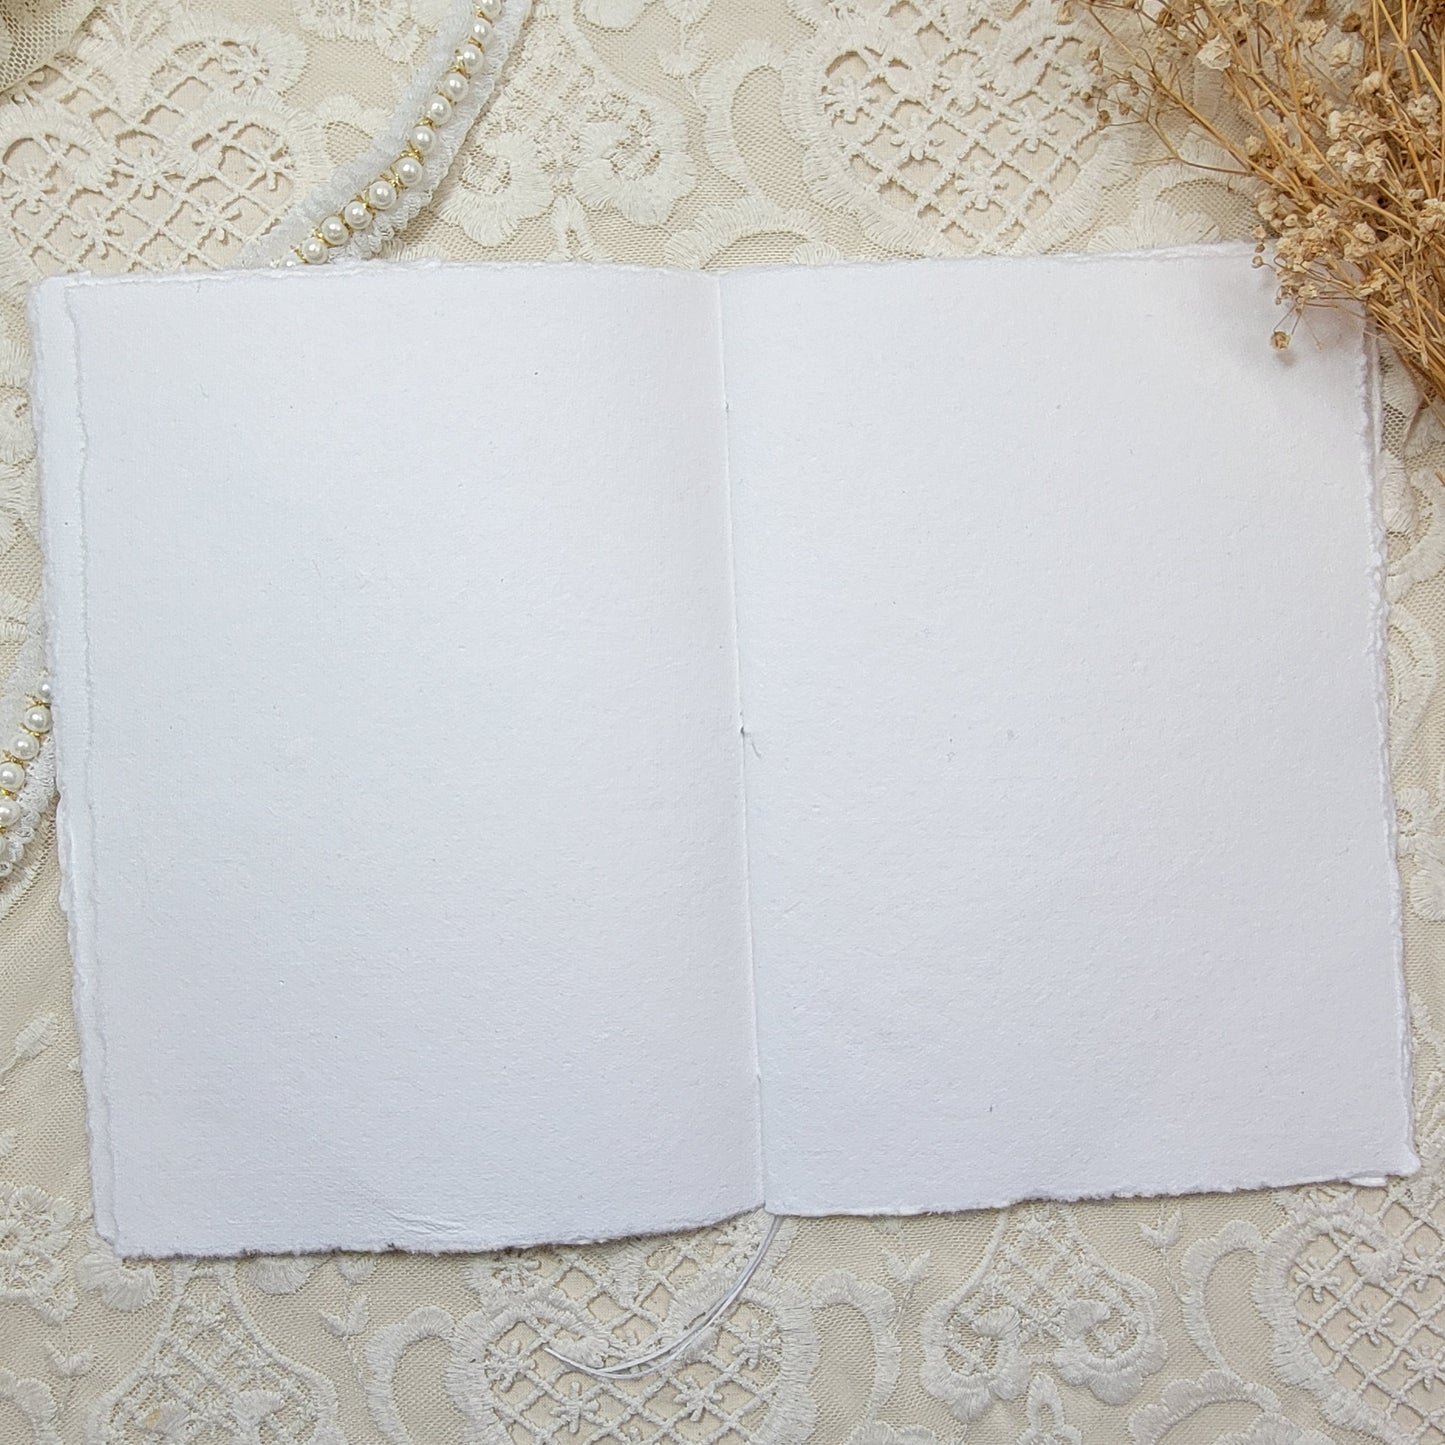 Blank Handmade Paper Journal